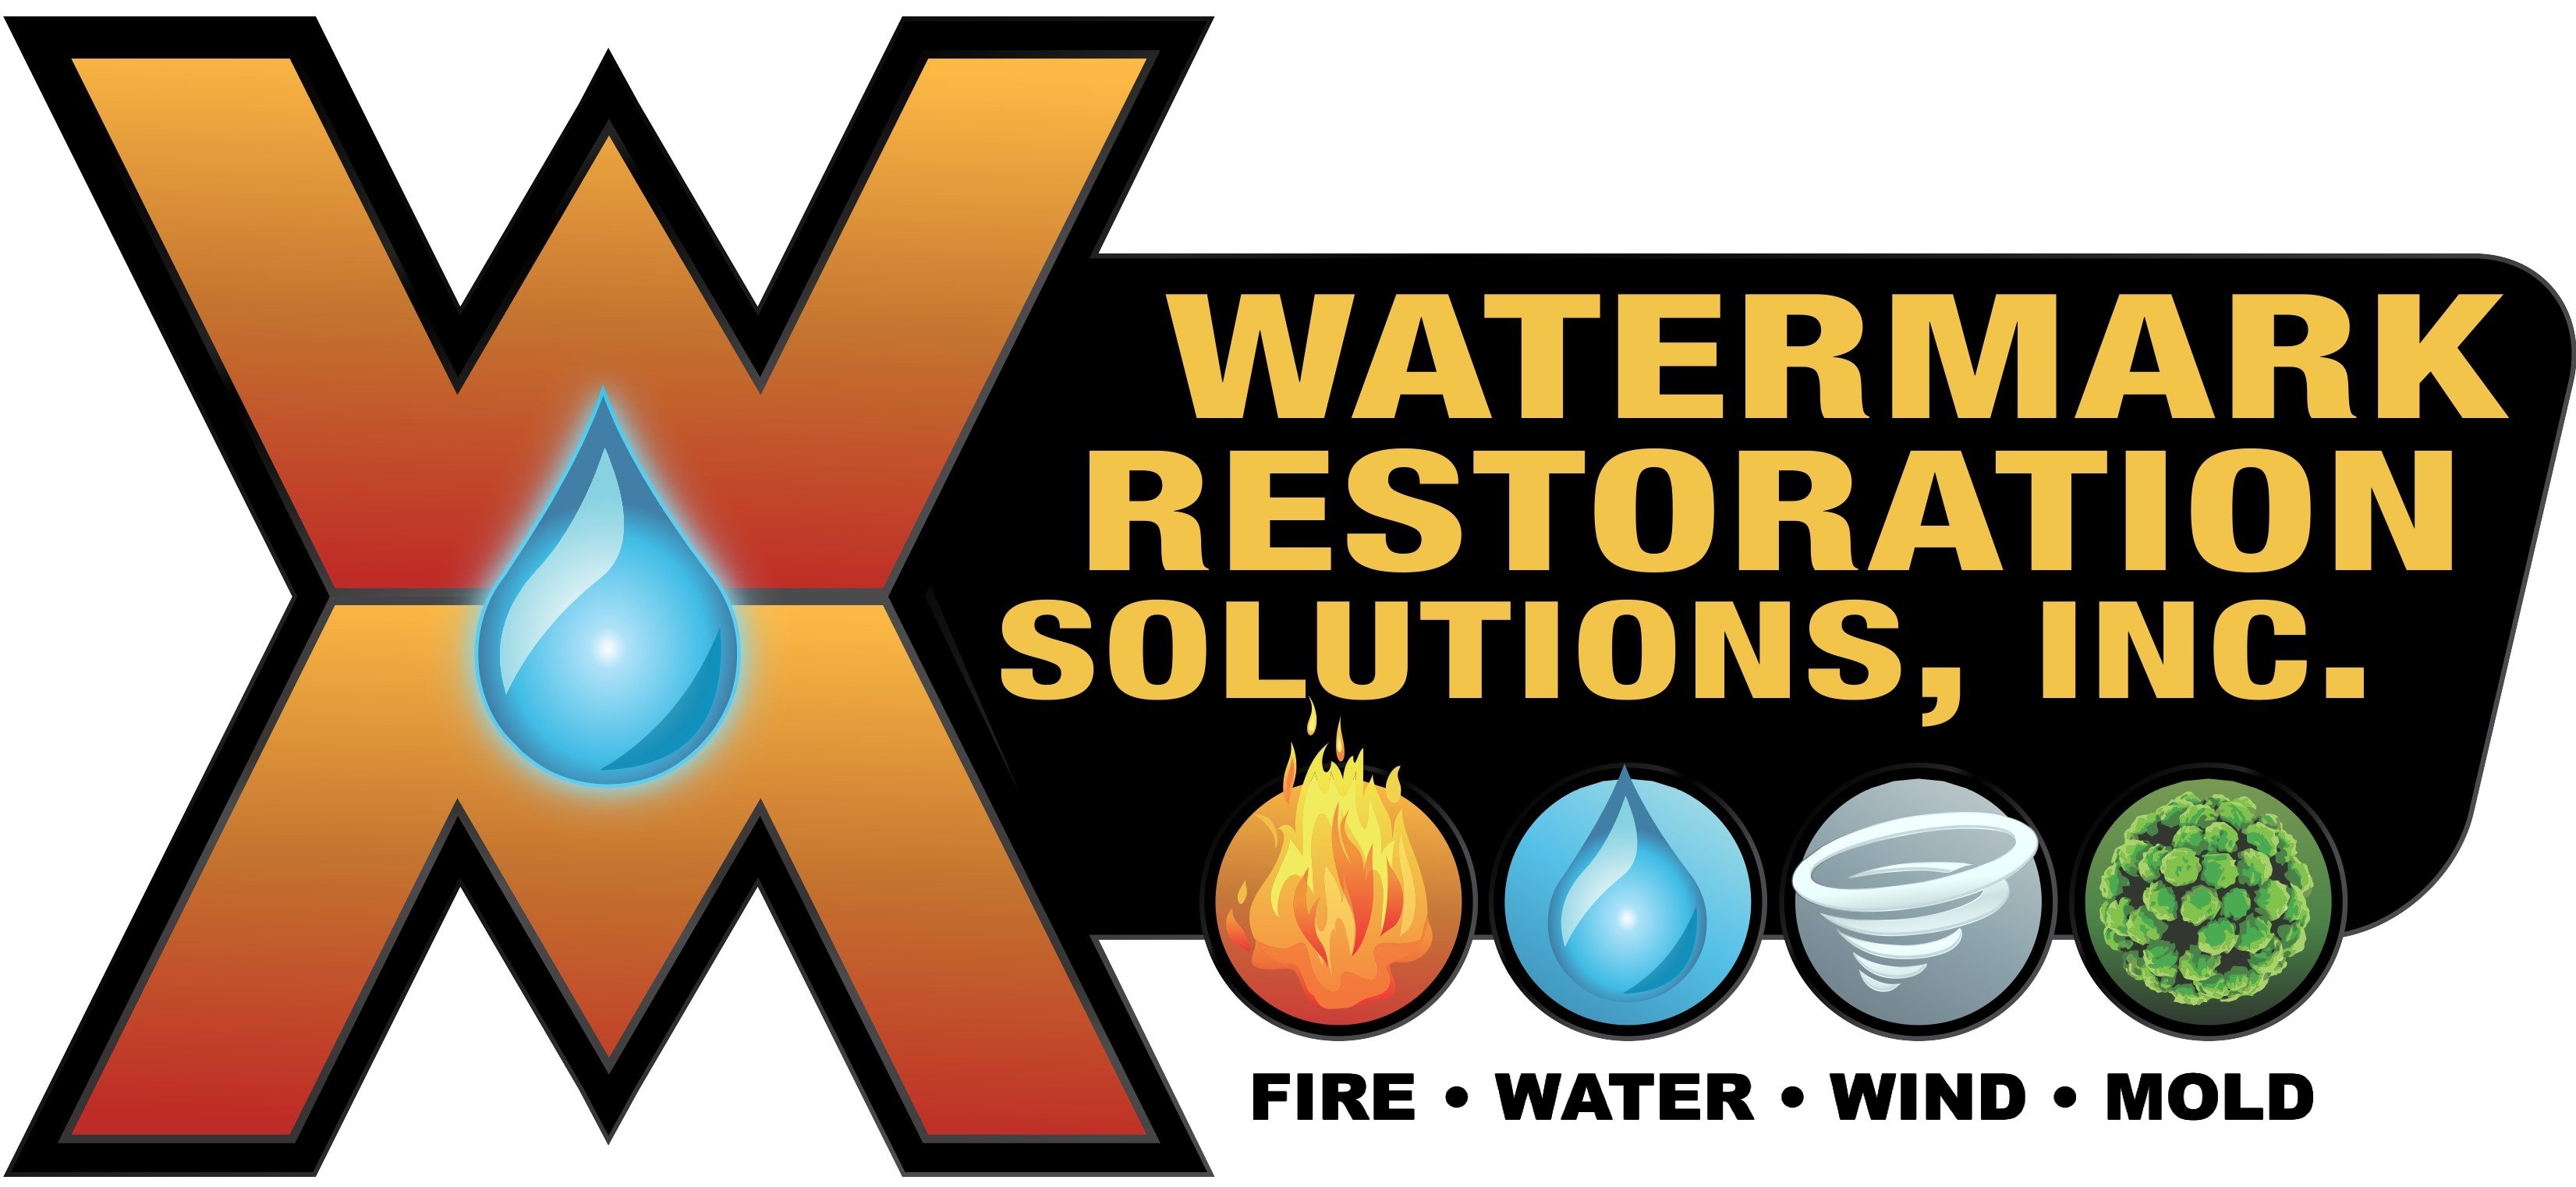 Watermark Restoration Solutions, Inc. Logo